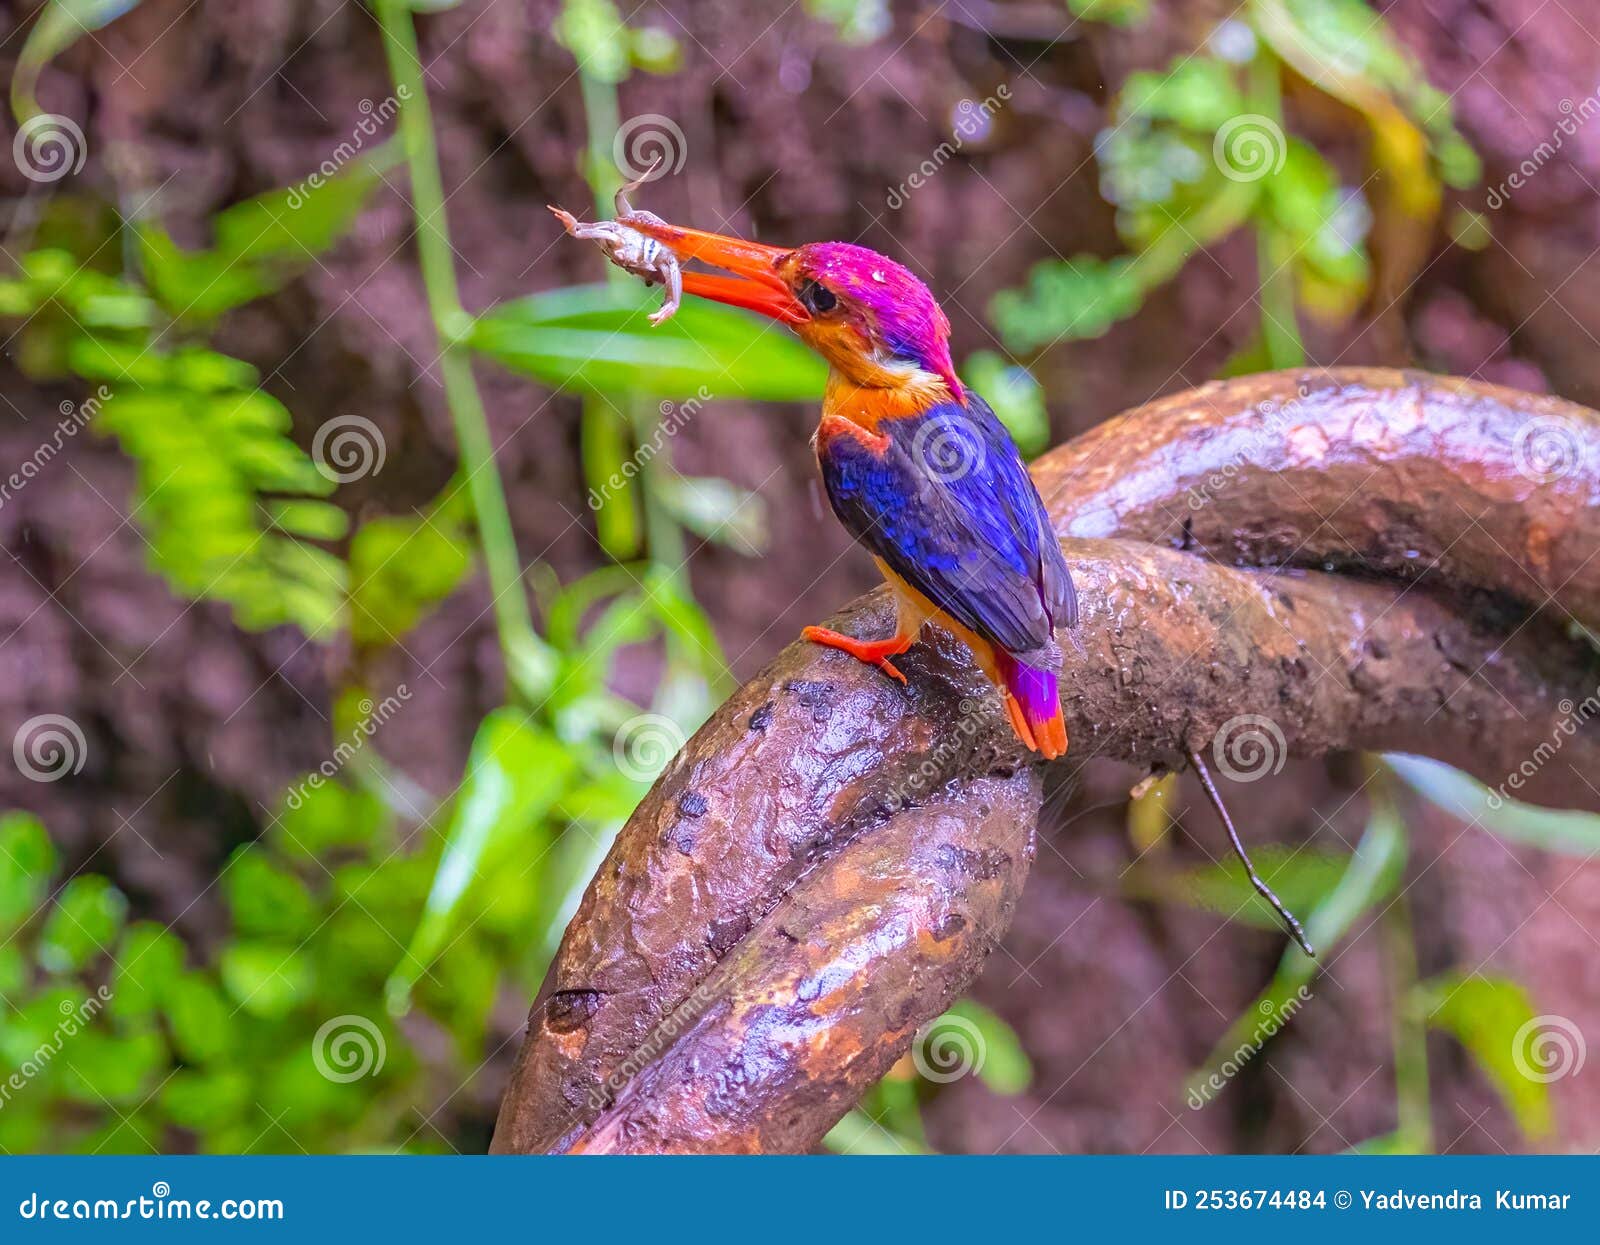 oriental dwarf kingfisher with a kill